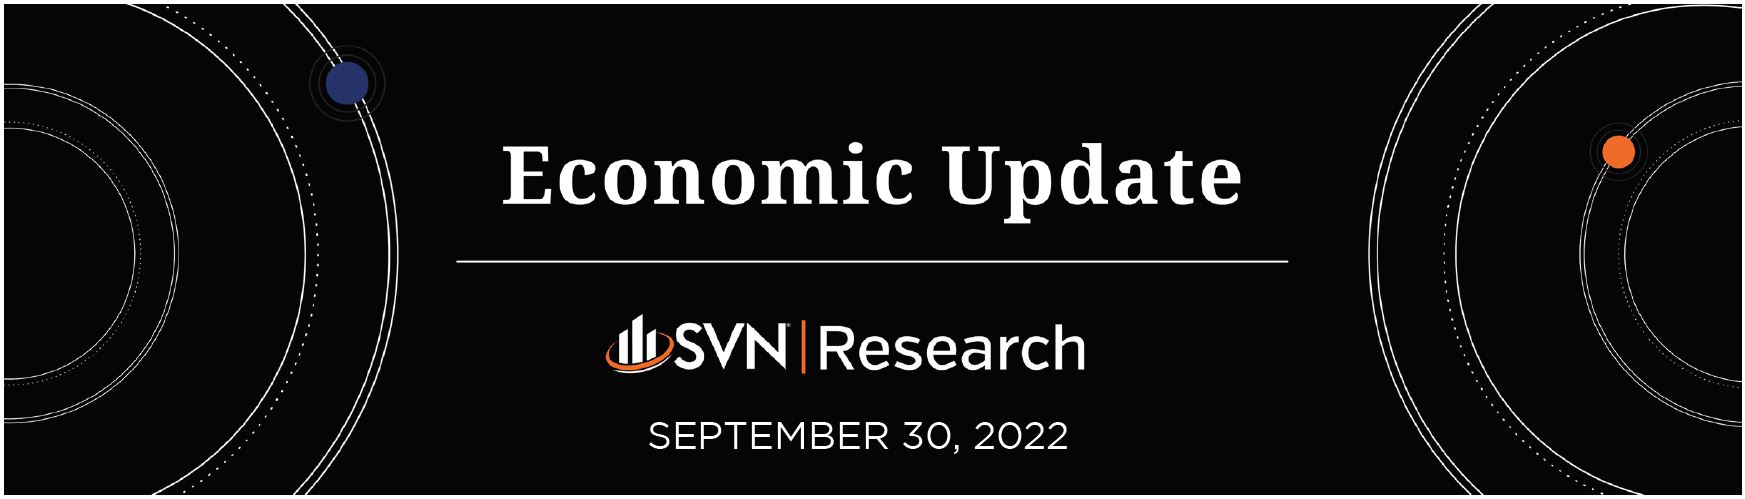 SVN | Research Economic Update 09.30.2022